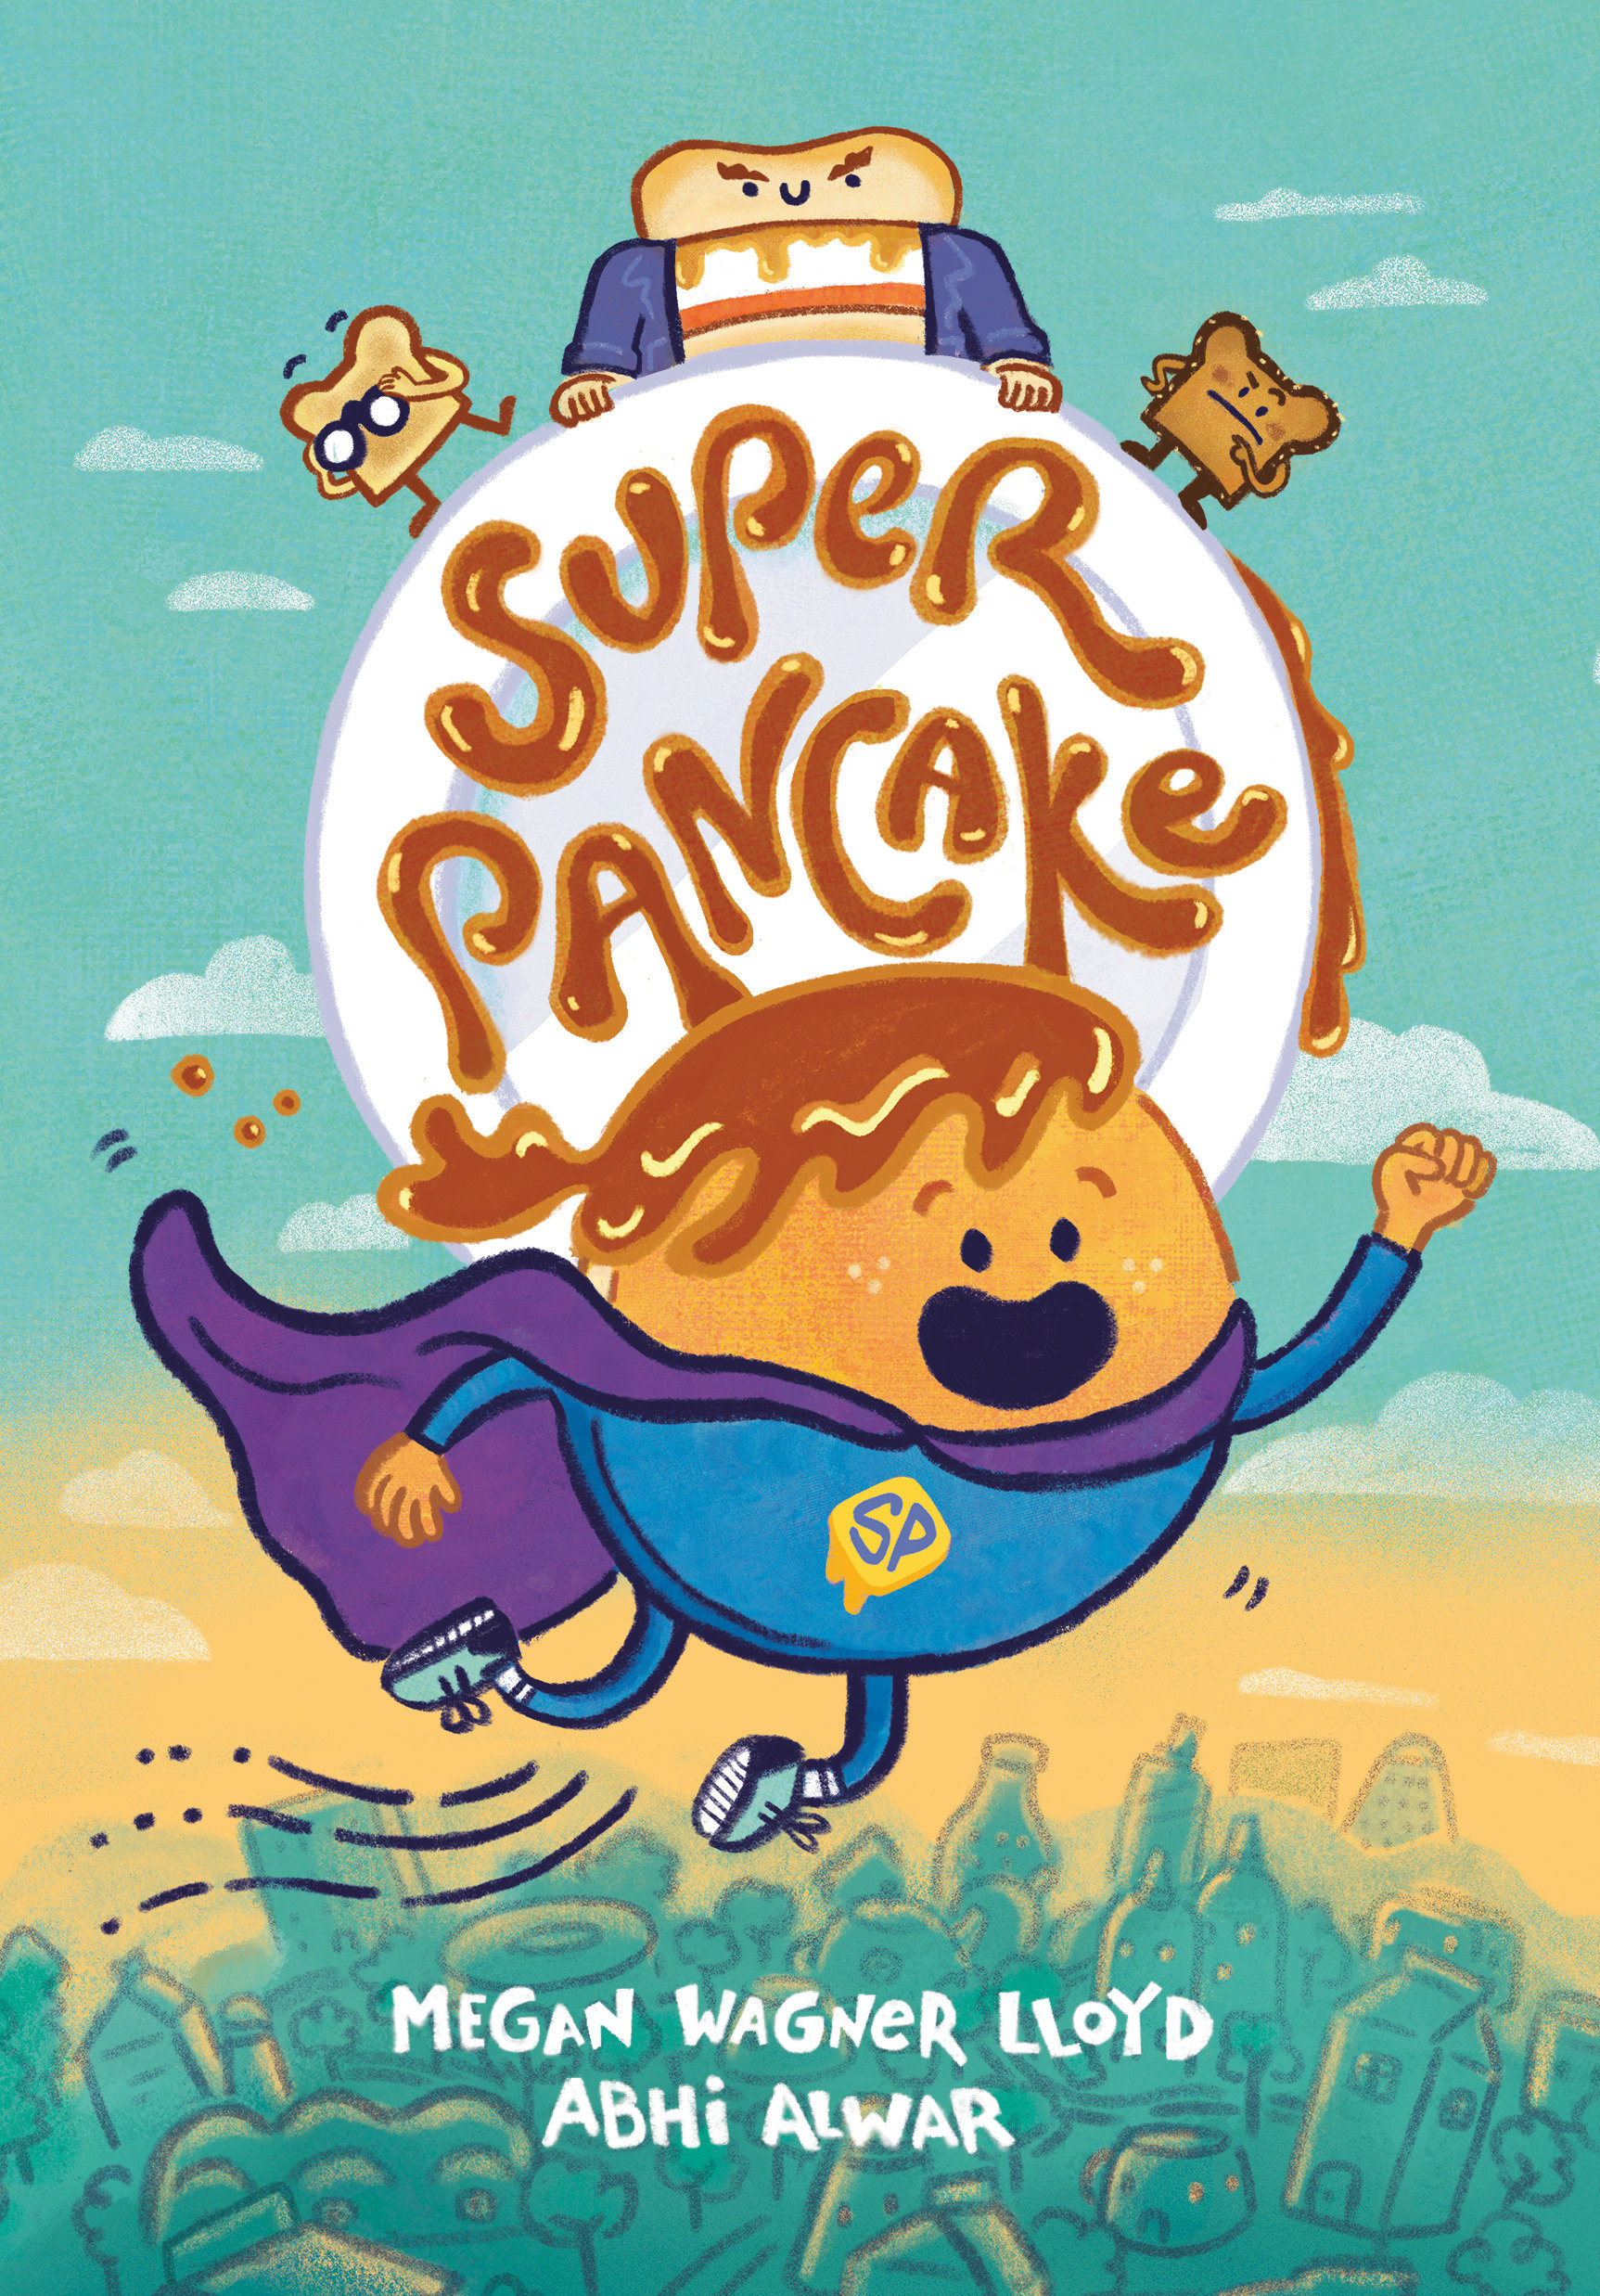 Super Pancake Hardcover Graphic Novel Volume 1